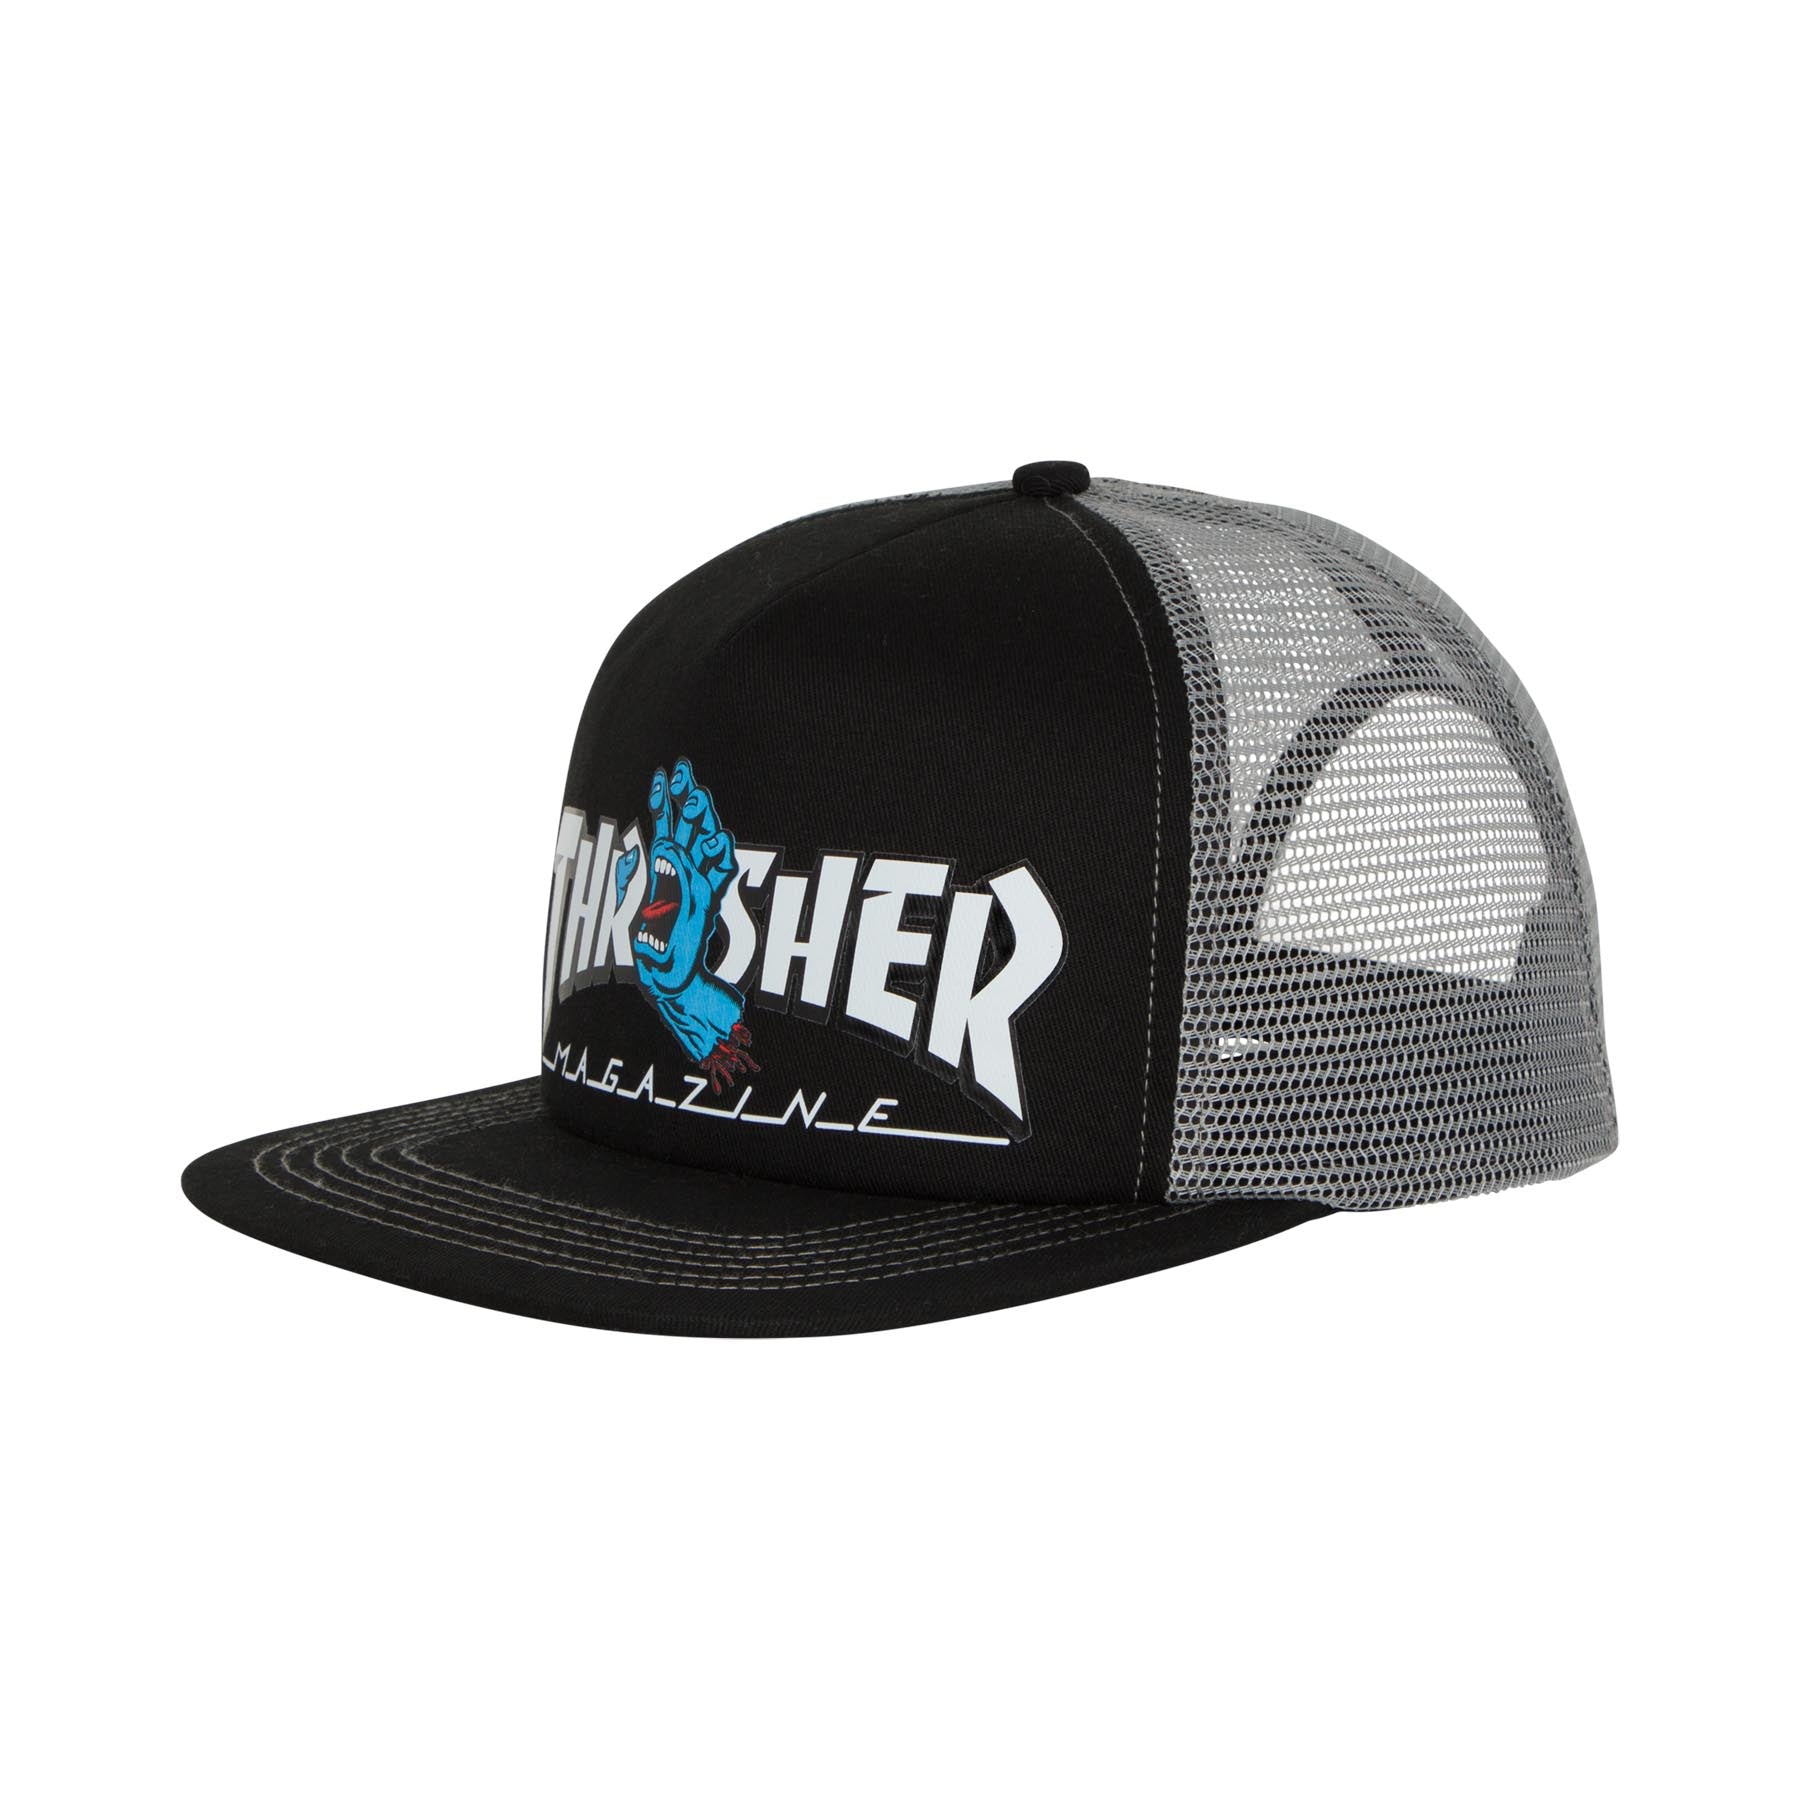 Santa Cruz x Thrasher Screaming Logo Mesh Trucker High Profile Hat Blk/Grey OS Unisex - Invisible Board Shop